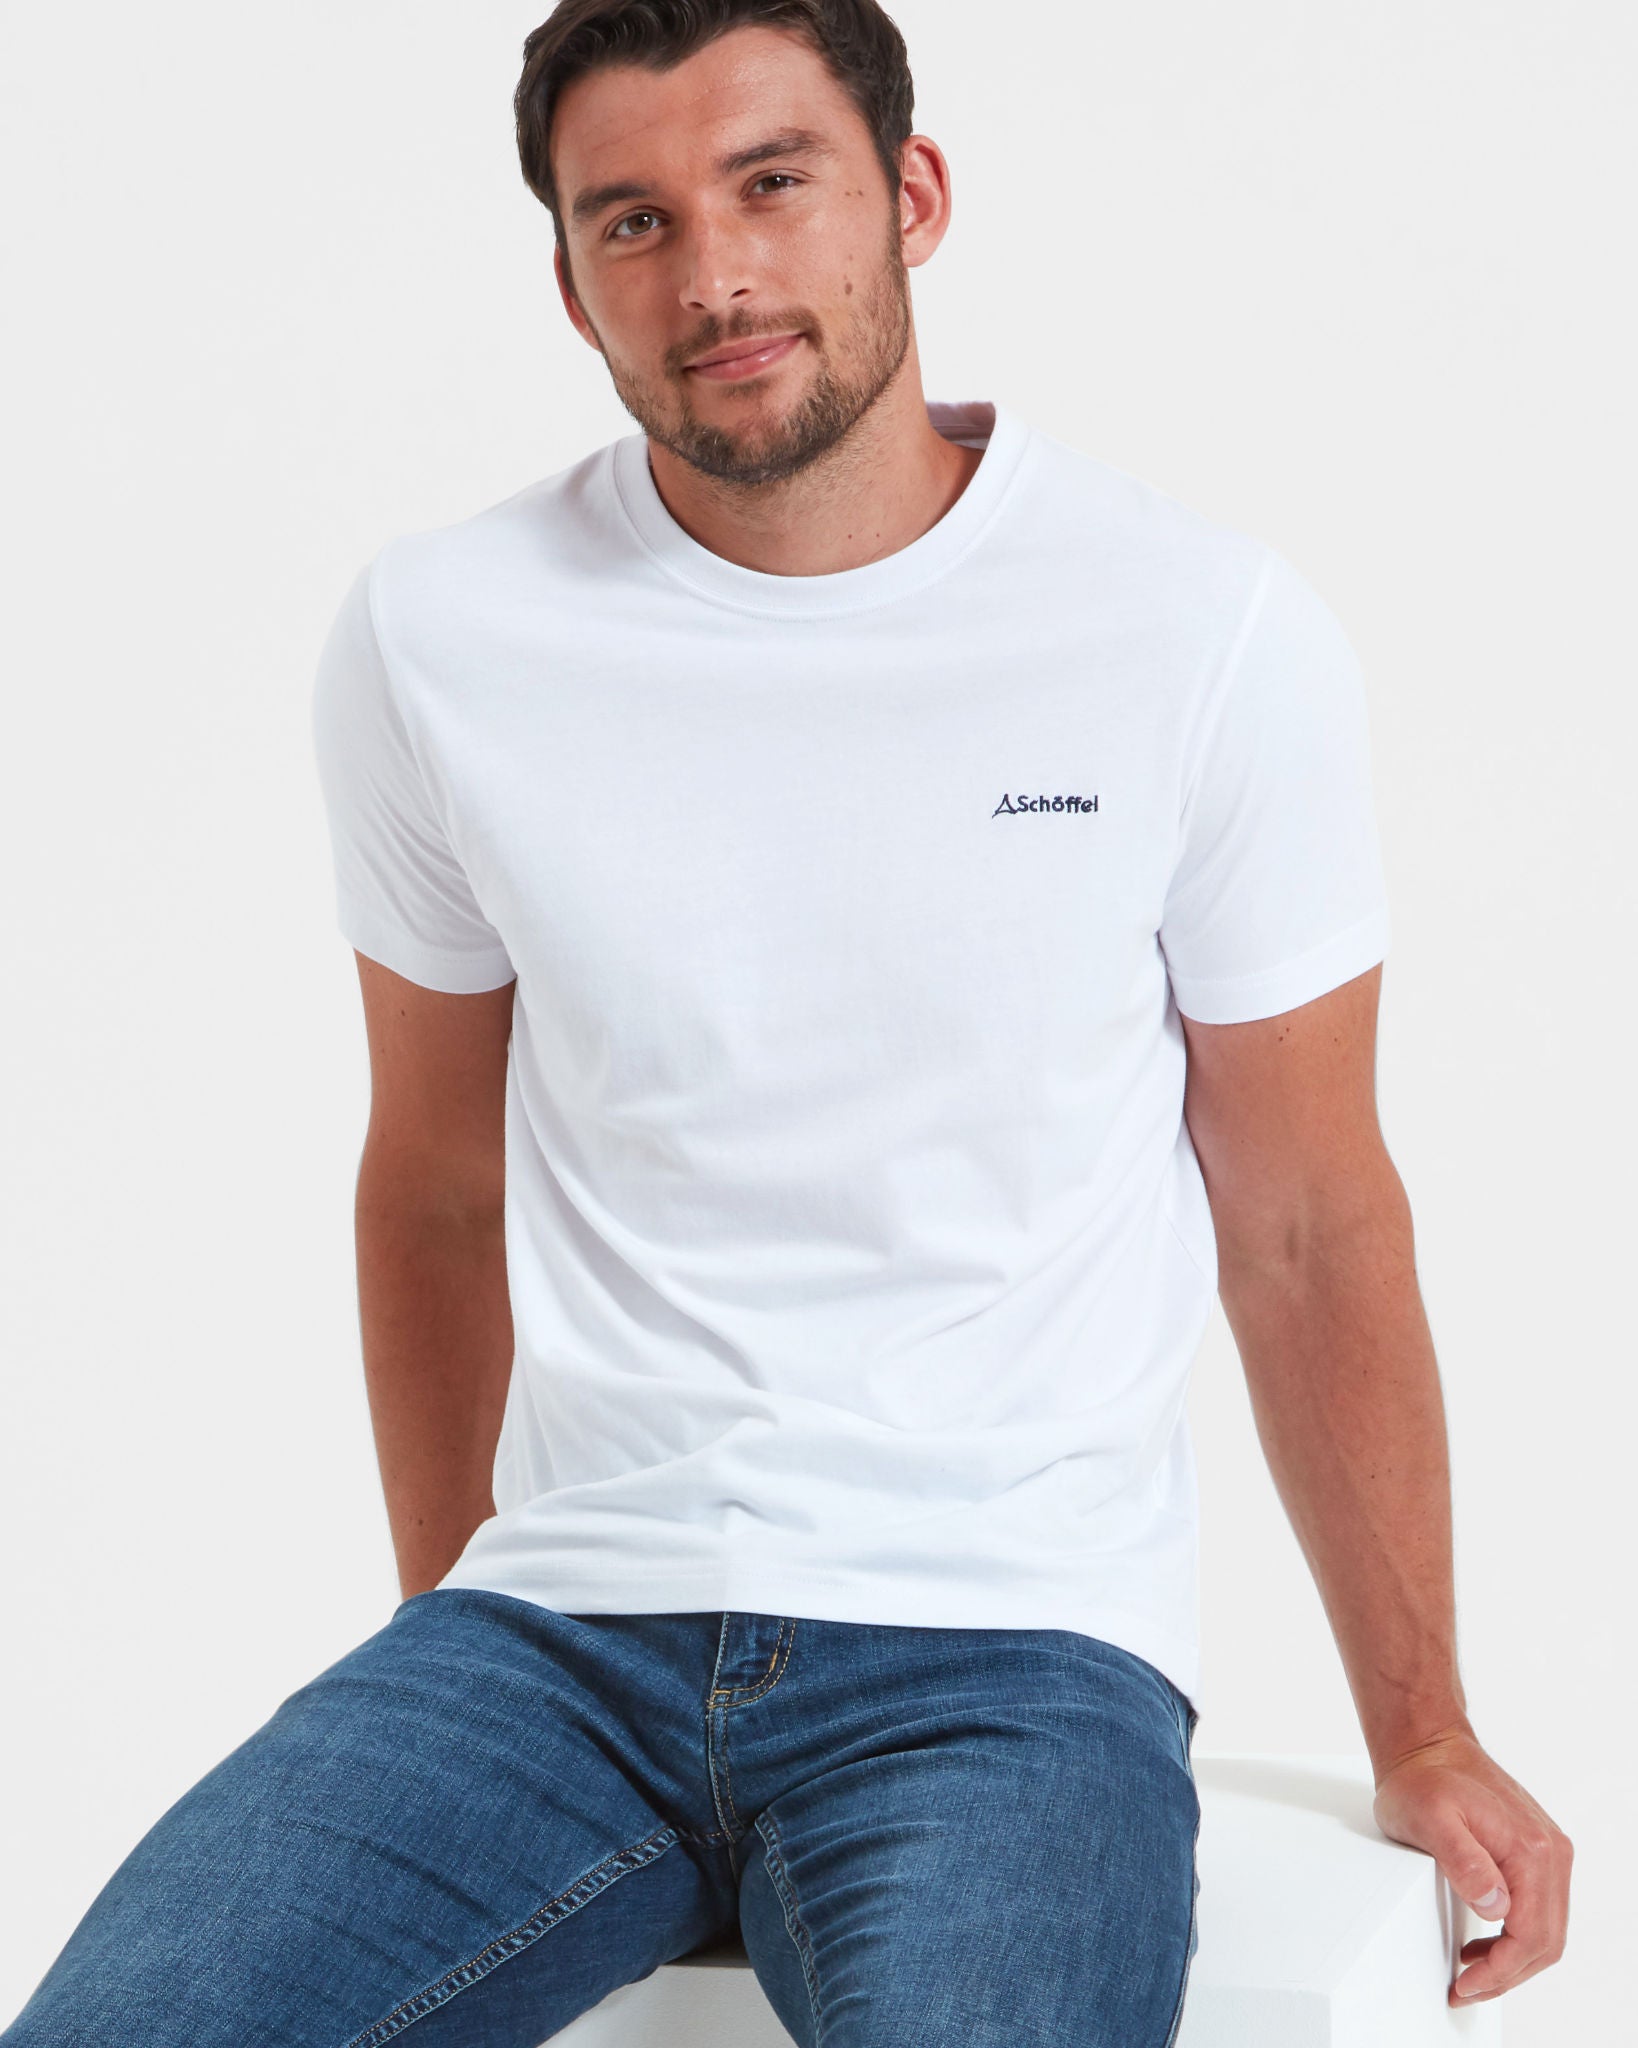 Trevone T-shirt - White